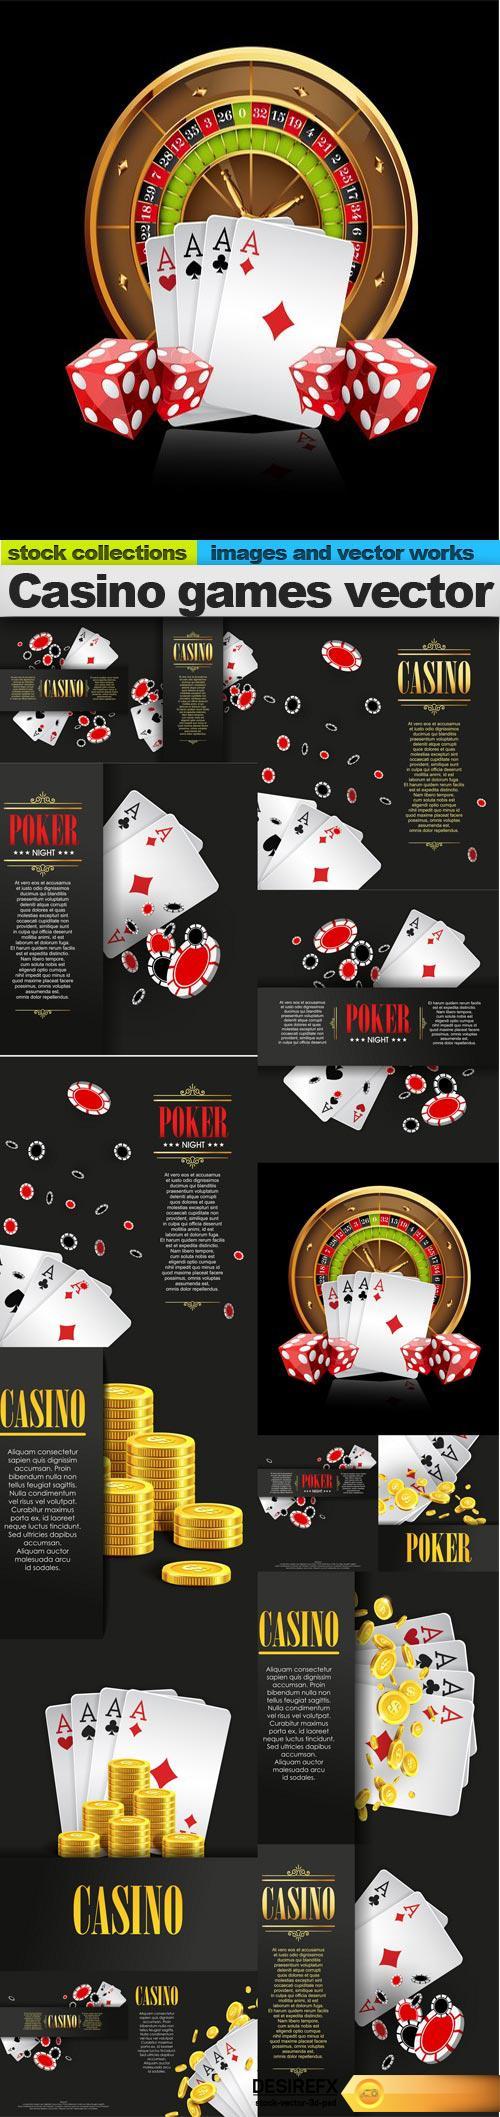 Casino games vector, 15 x EPS